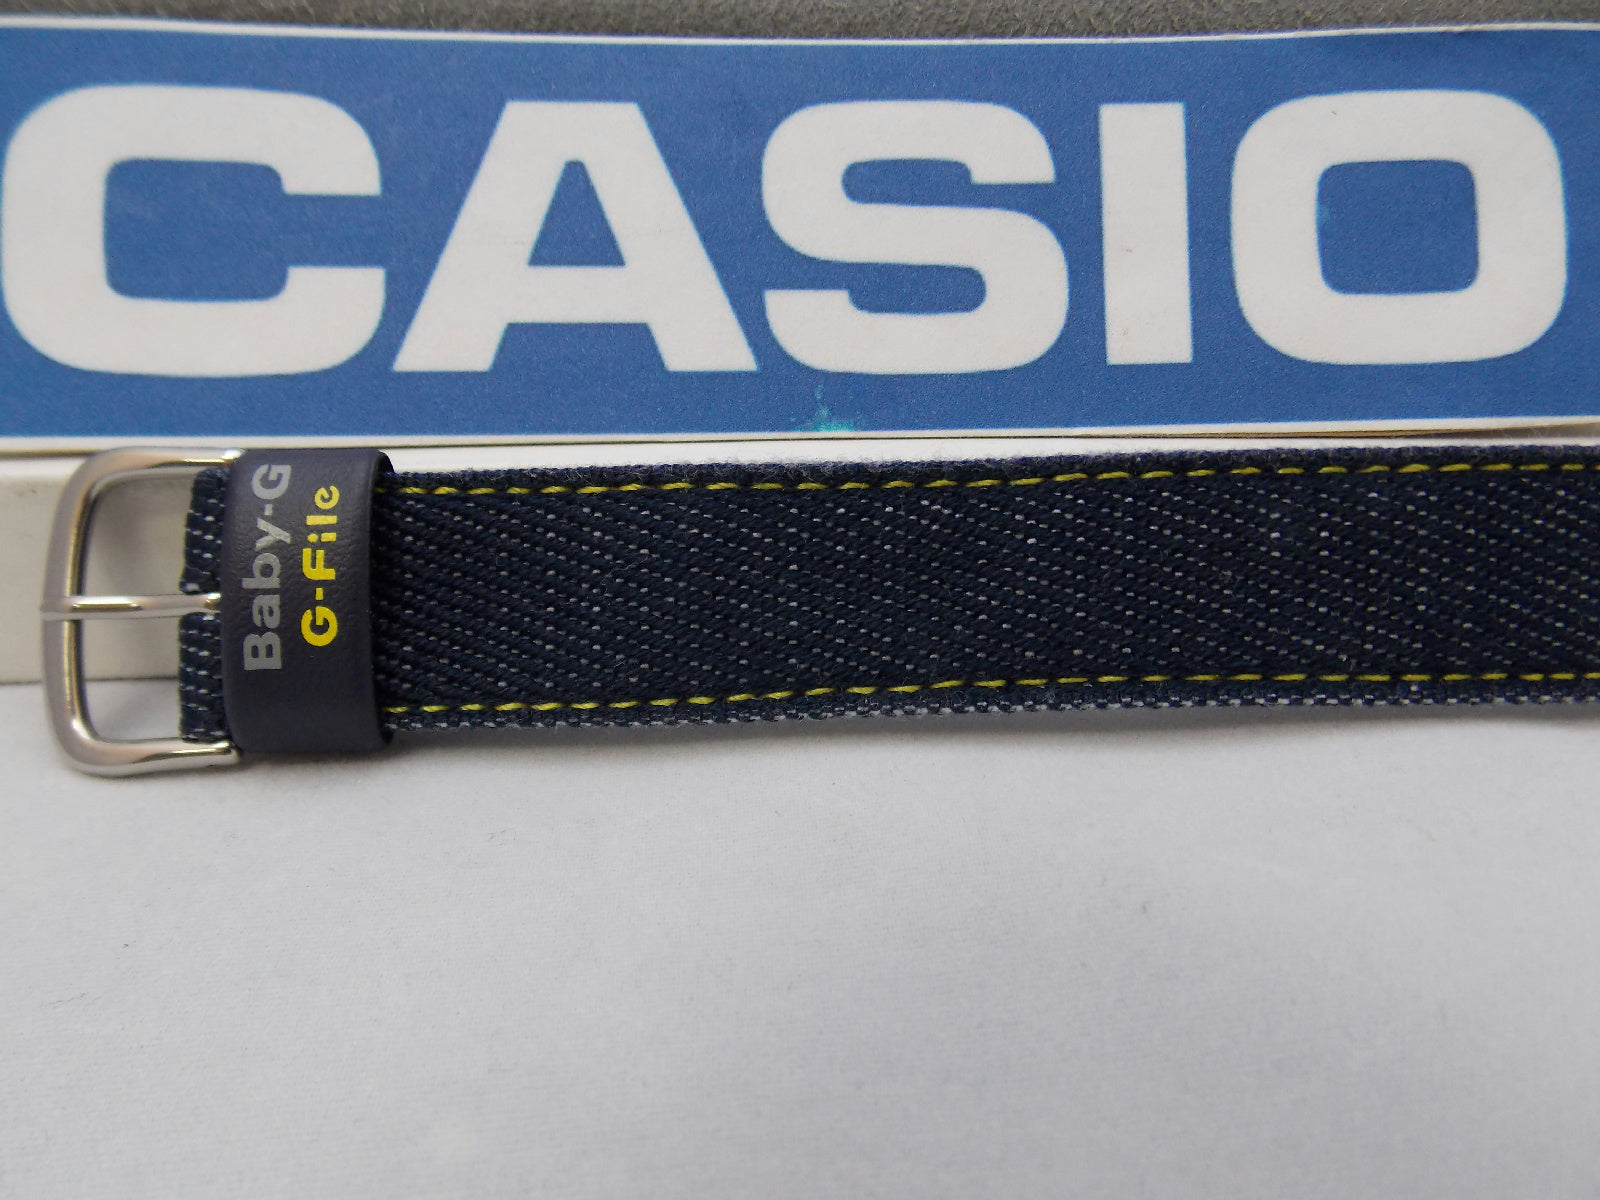 Casio watchband BG-151 Denim Yellow Outline Stitched.One Piece 20mm Baby G File